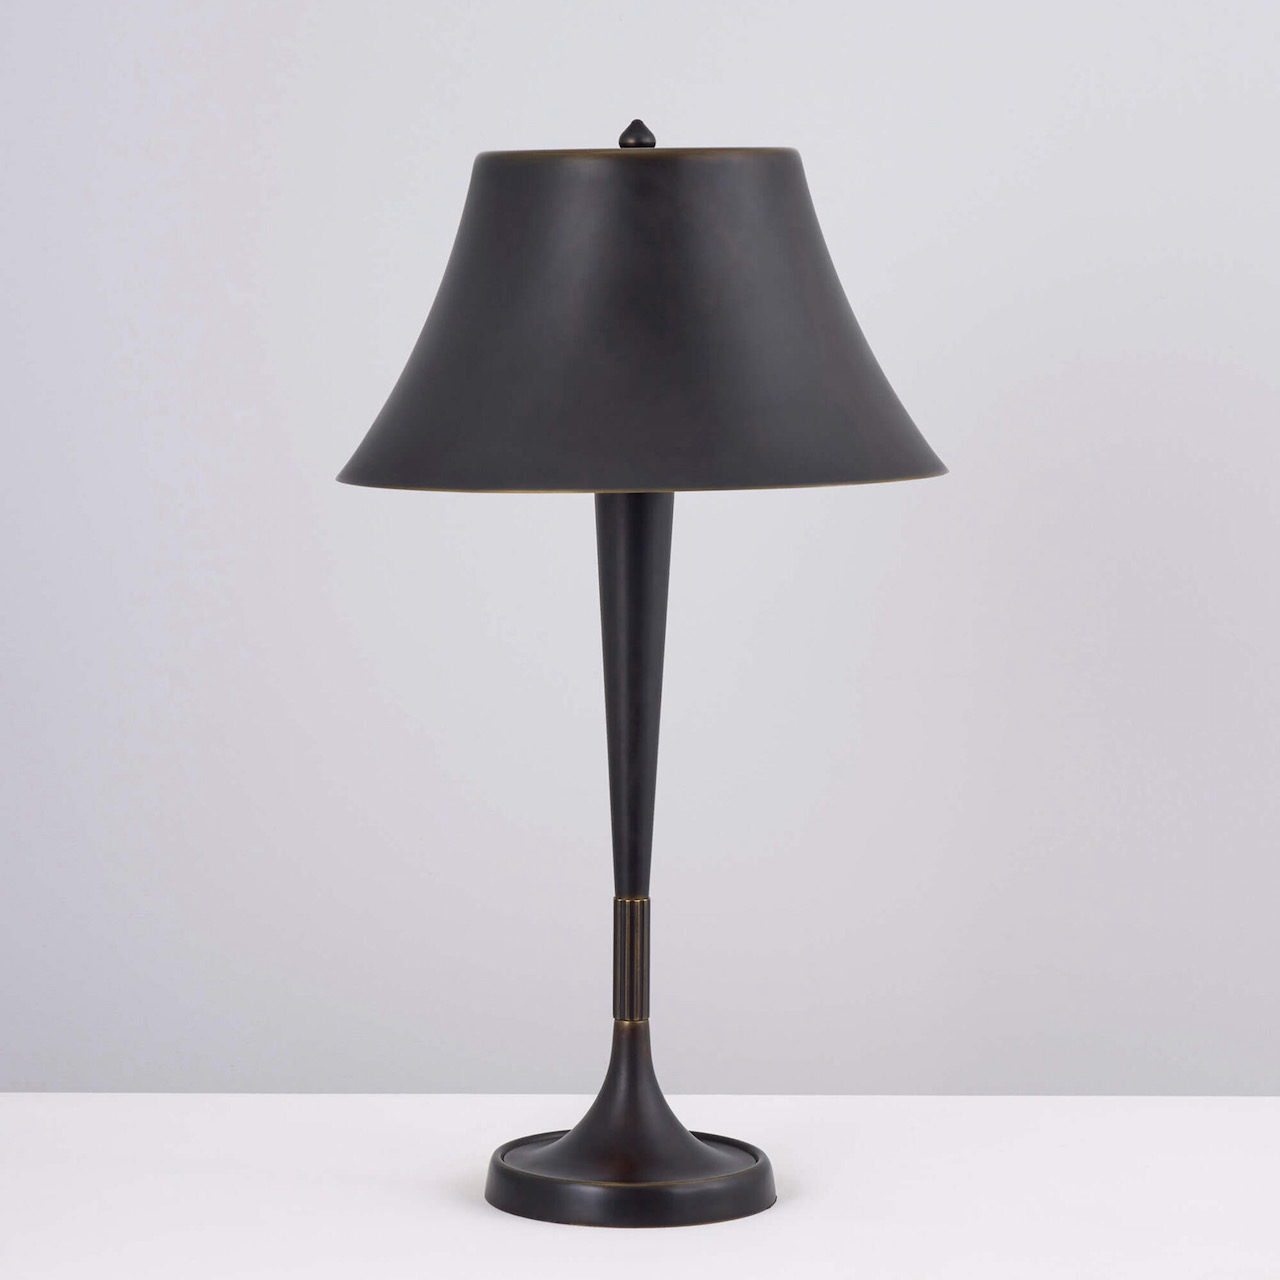 Bourse Lamp // Collier Webb